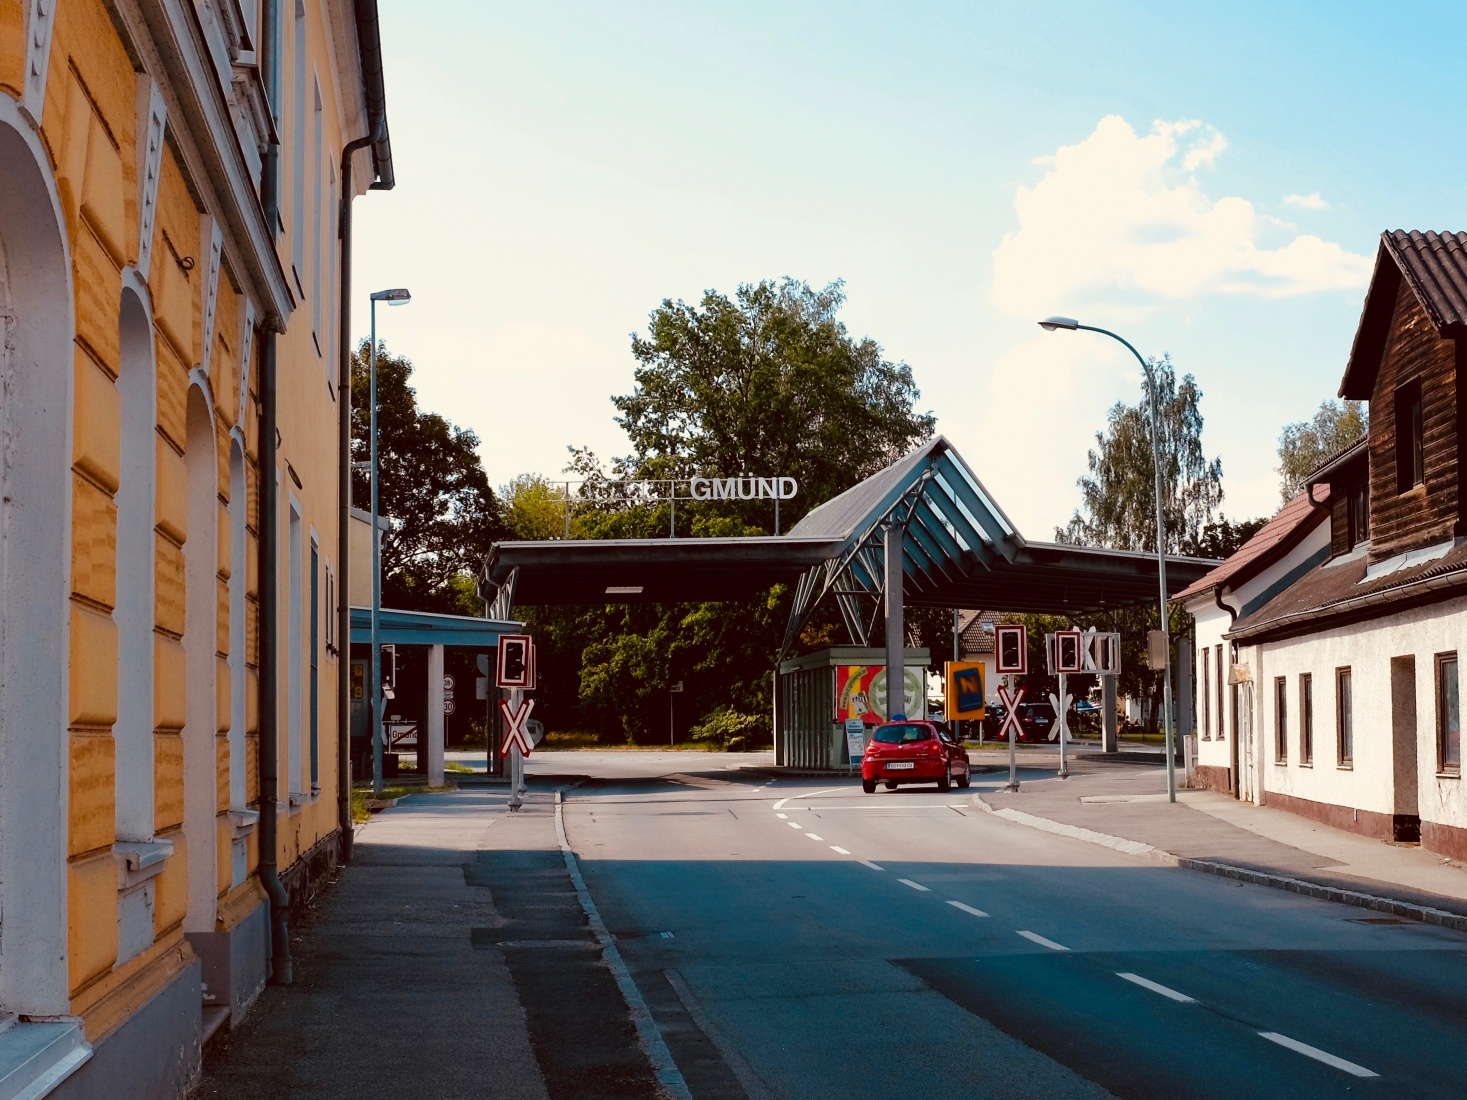 The old Cold War era border post between České Velenice, Czech Republic, and Gmünd, Austria.